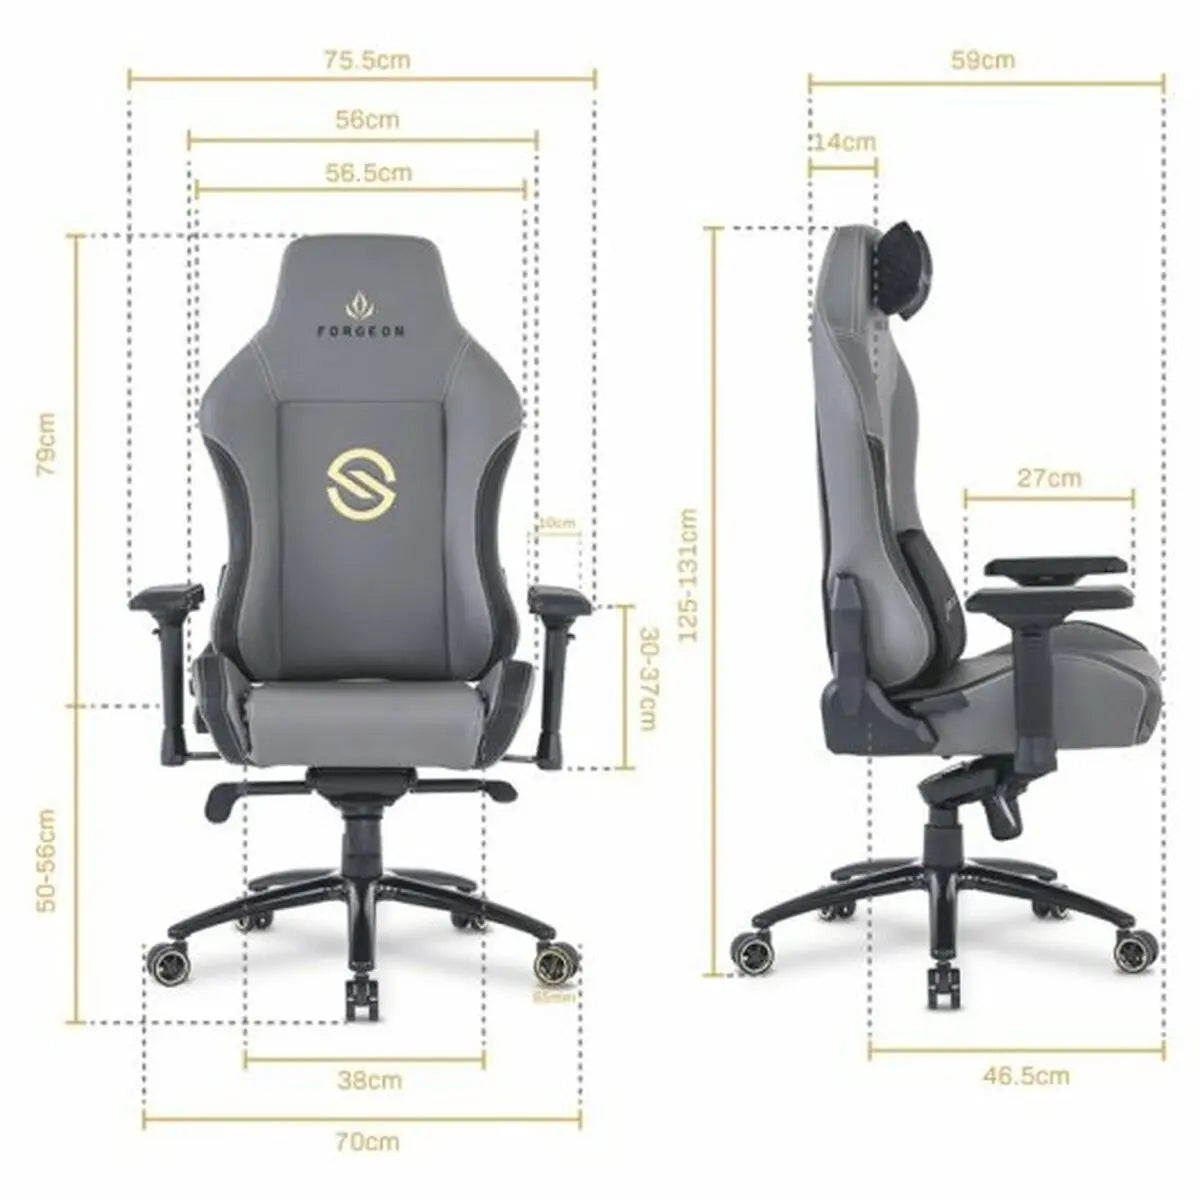 Gaming Chair Forgeon Grey - IGSI Europe Ltd